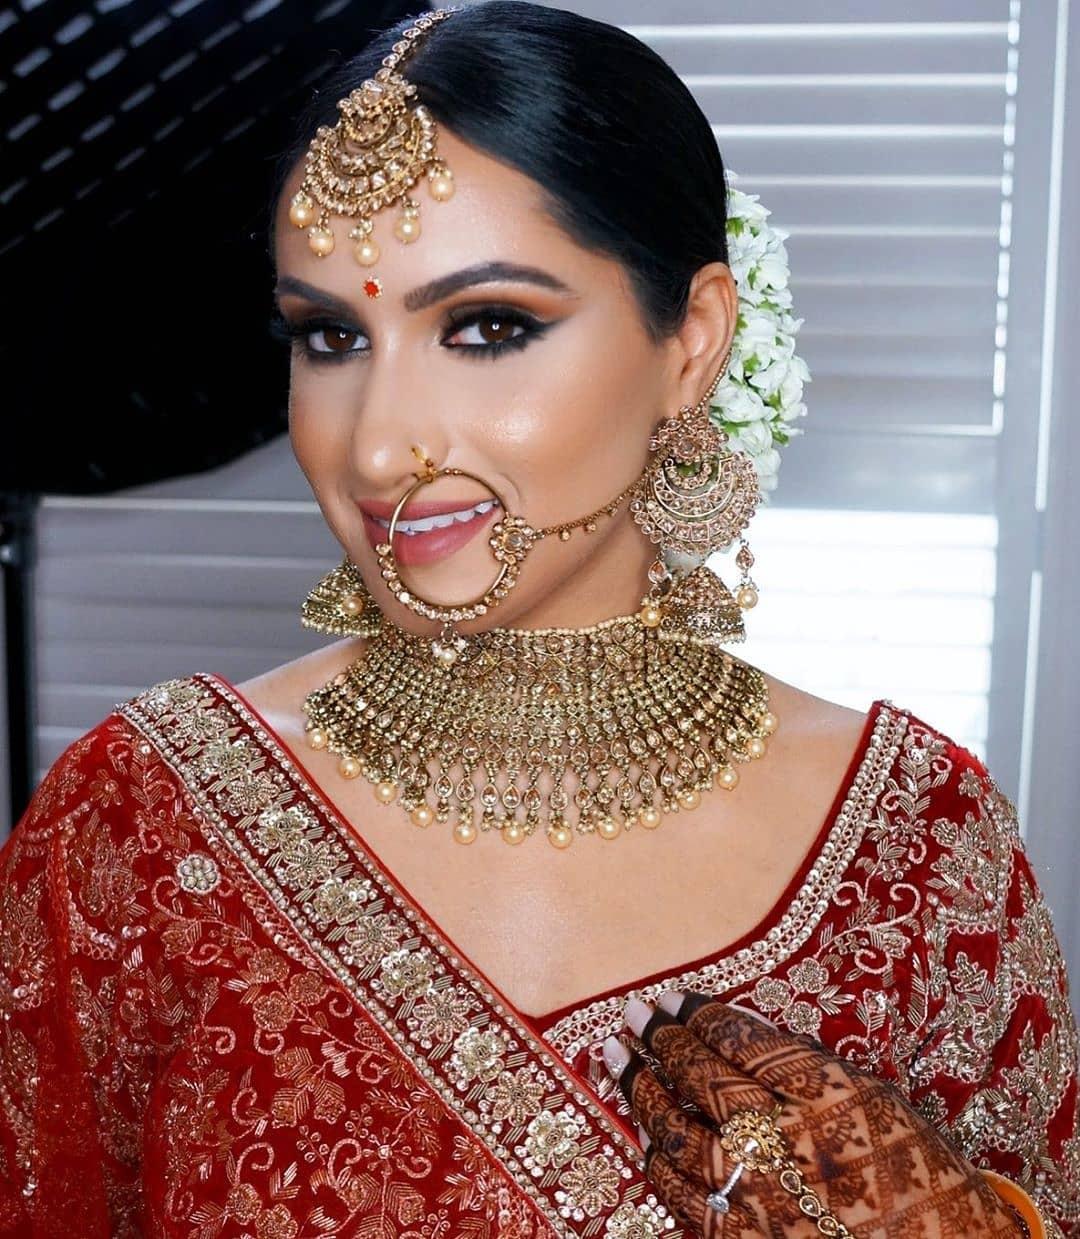 New Gold chandbali designs weddings || Moon earrings - YouTube